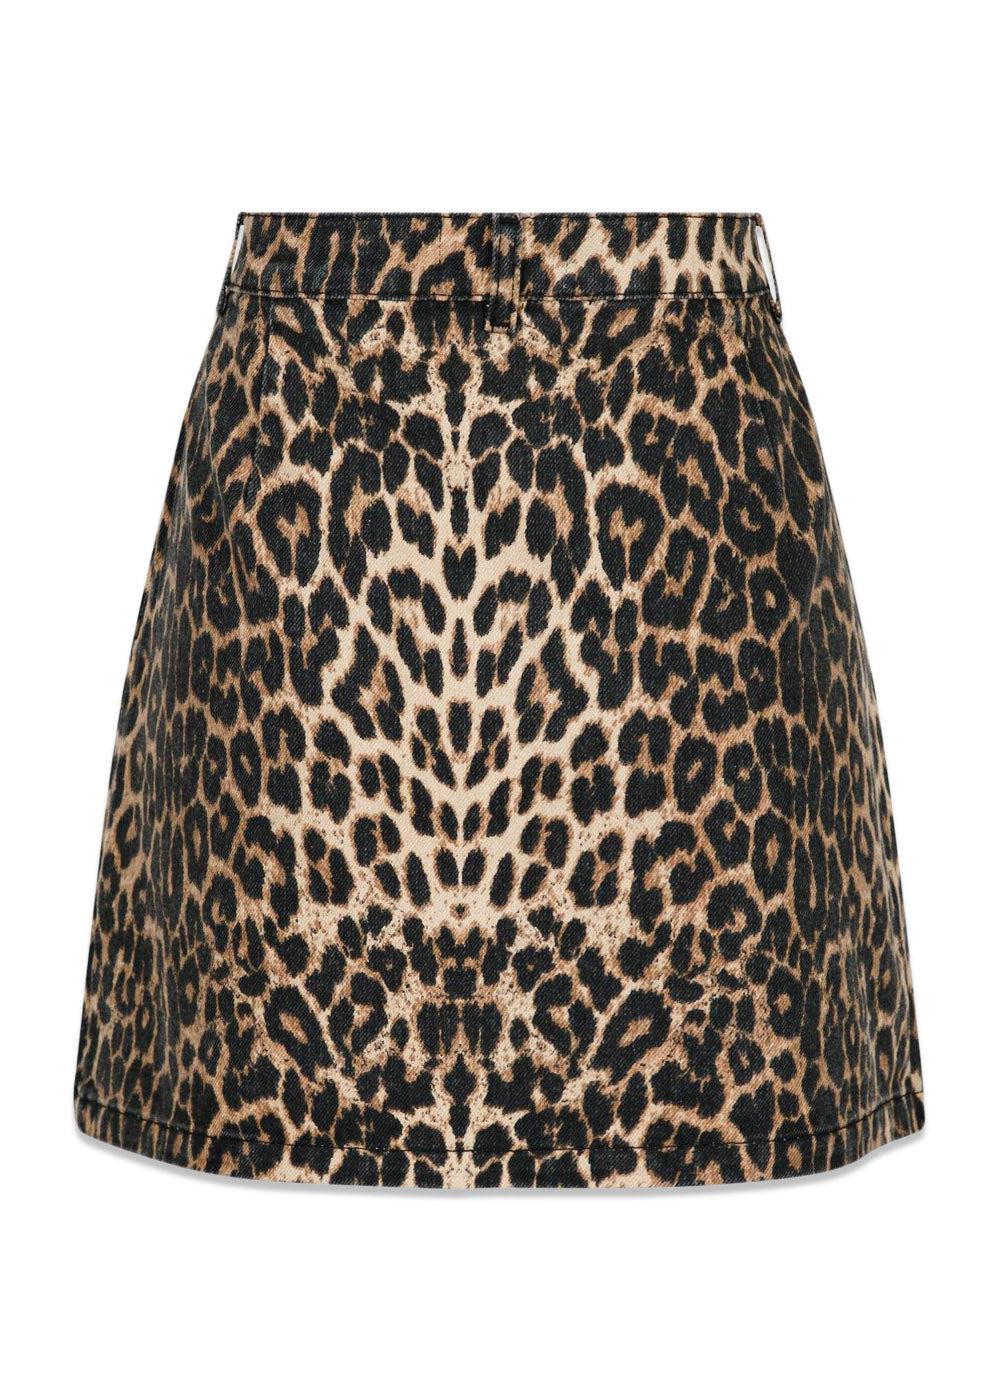 Kendra Leopard Skirt - Leopard